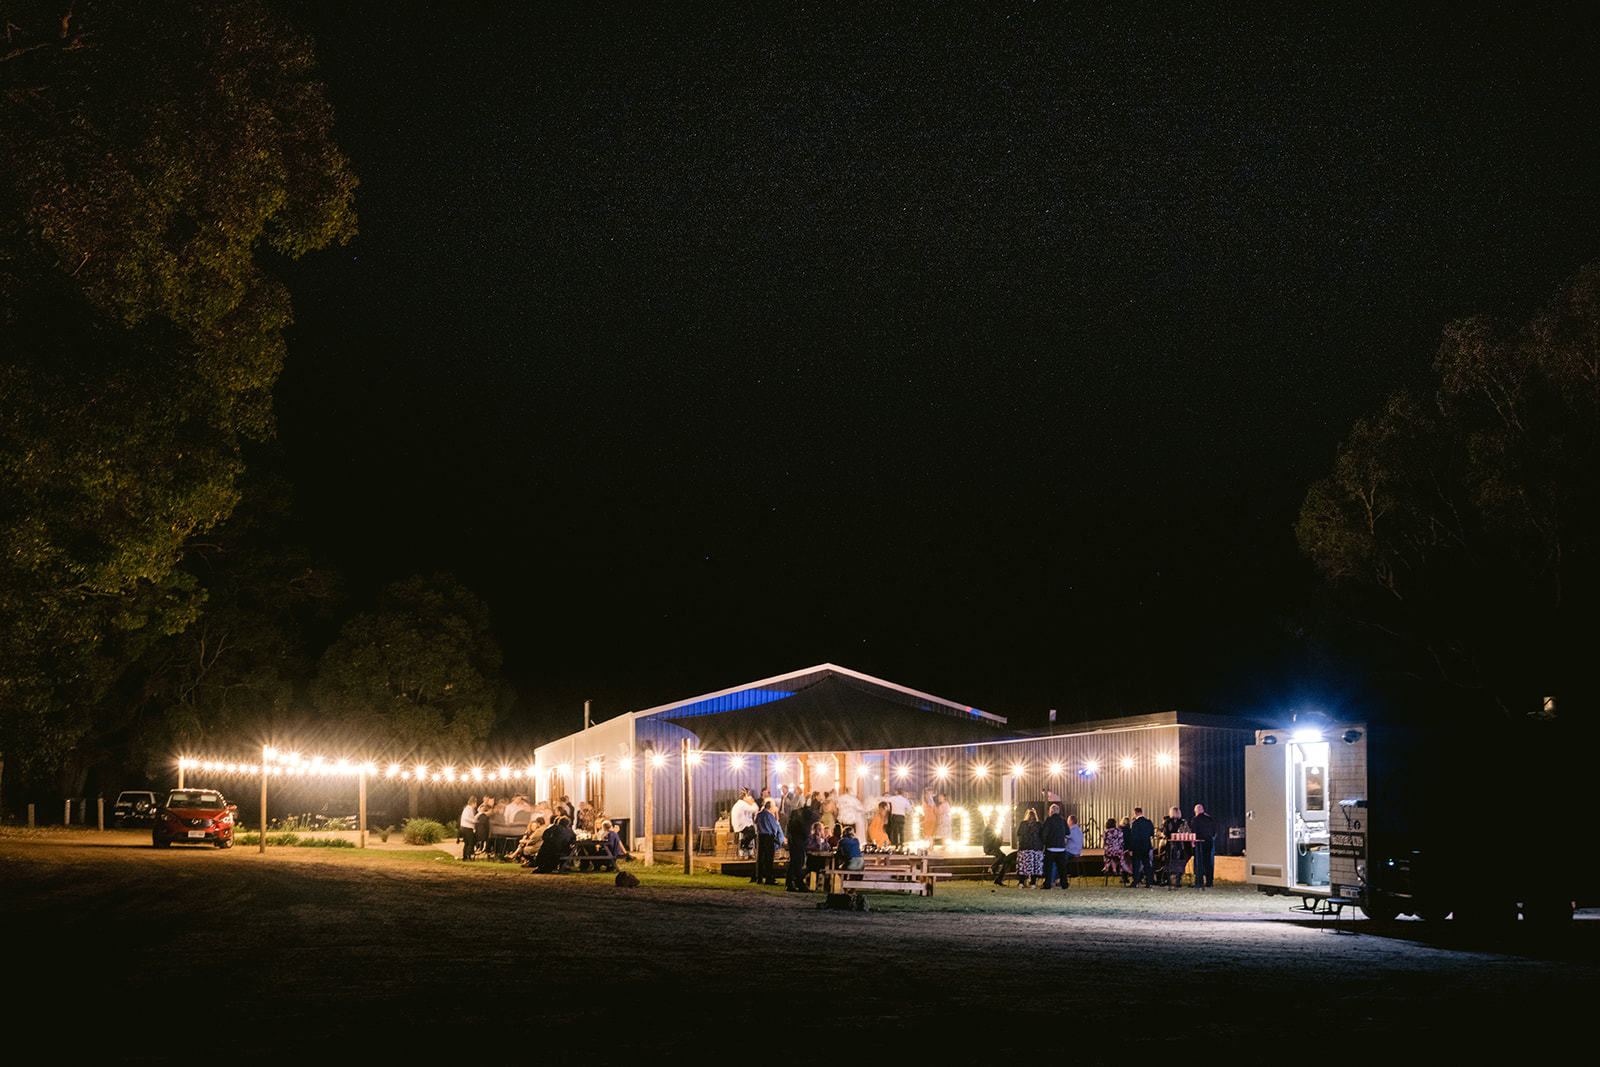 Wedding reception hall at Jarrahfall Bush Camp in Dwellingup. Dancing under the stars